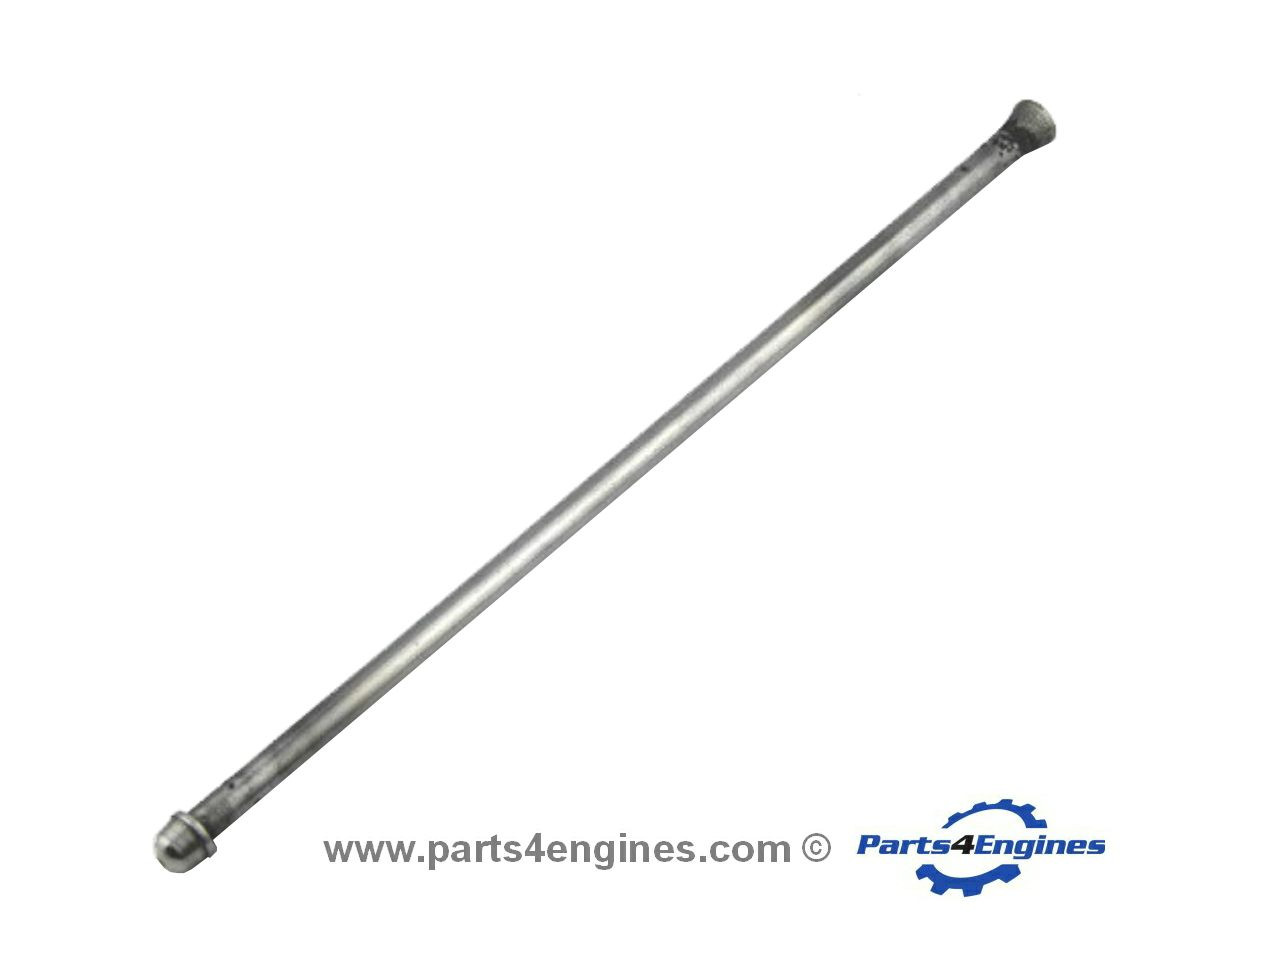 Perkins Perama M35 Pushrod - parts4engines.com